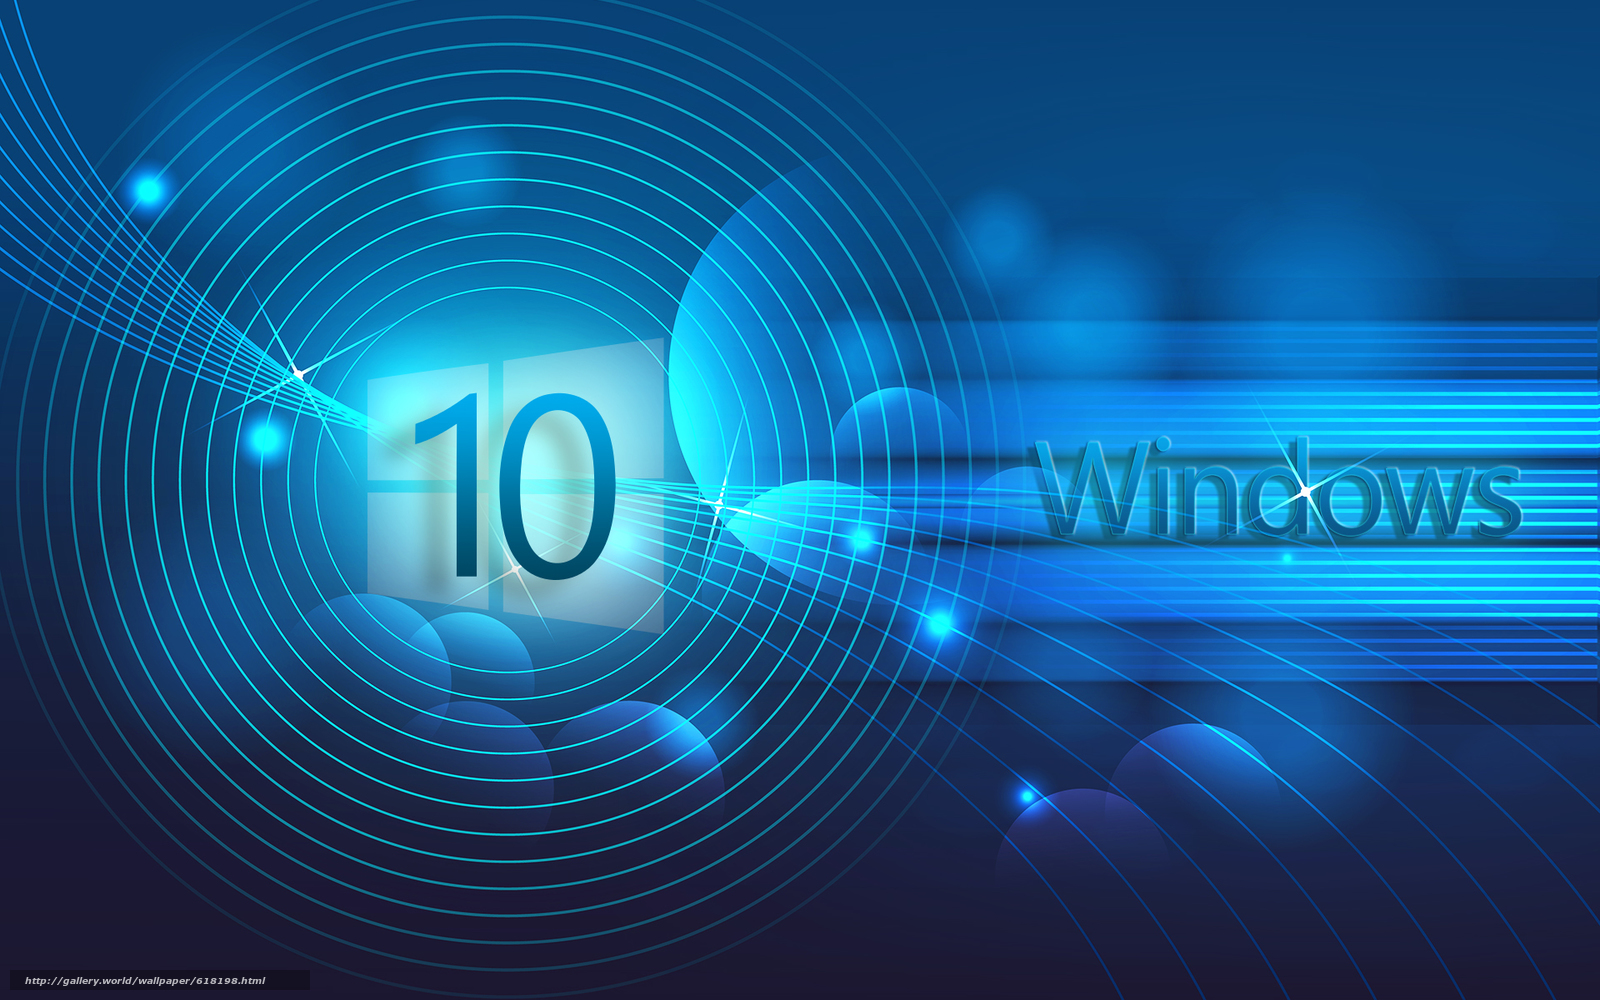 windows 10 image download